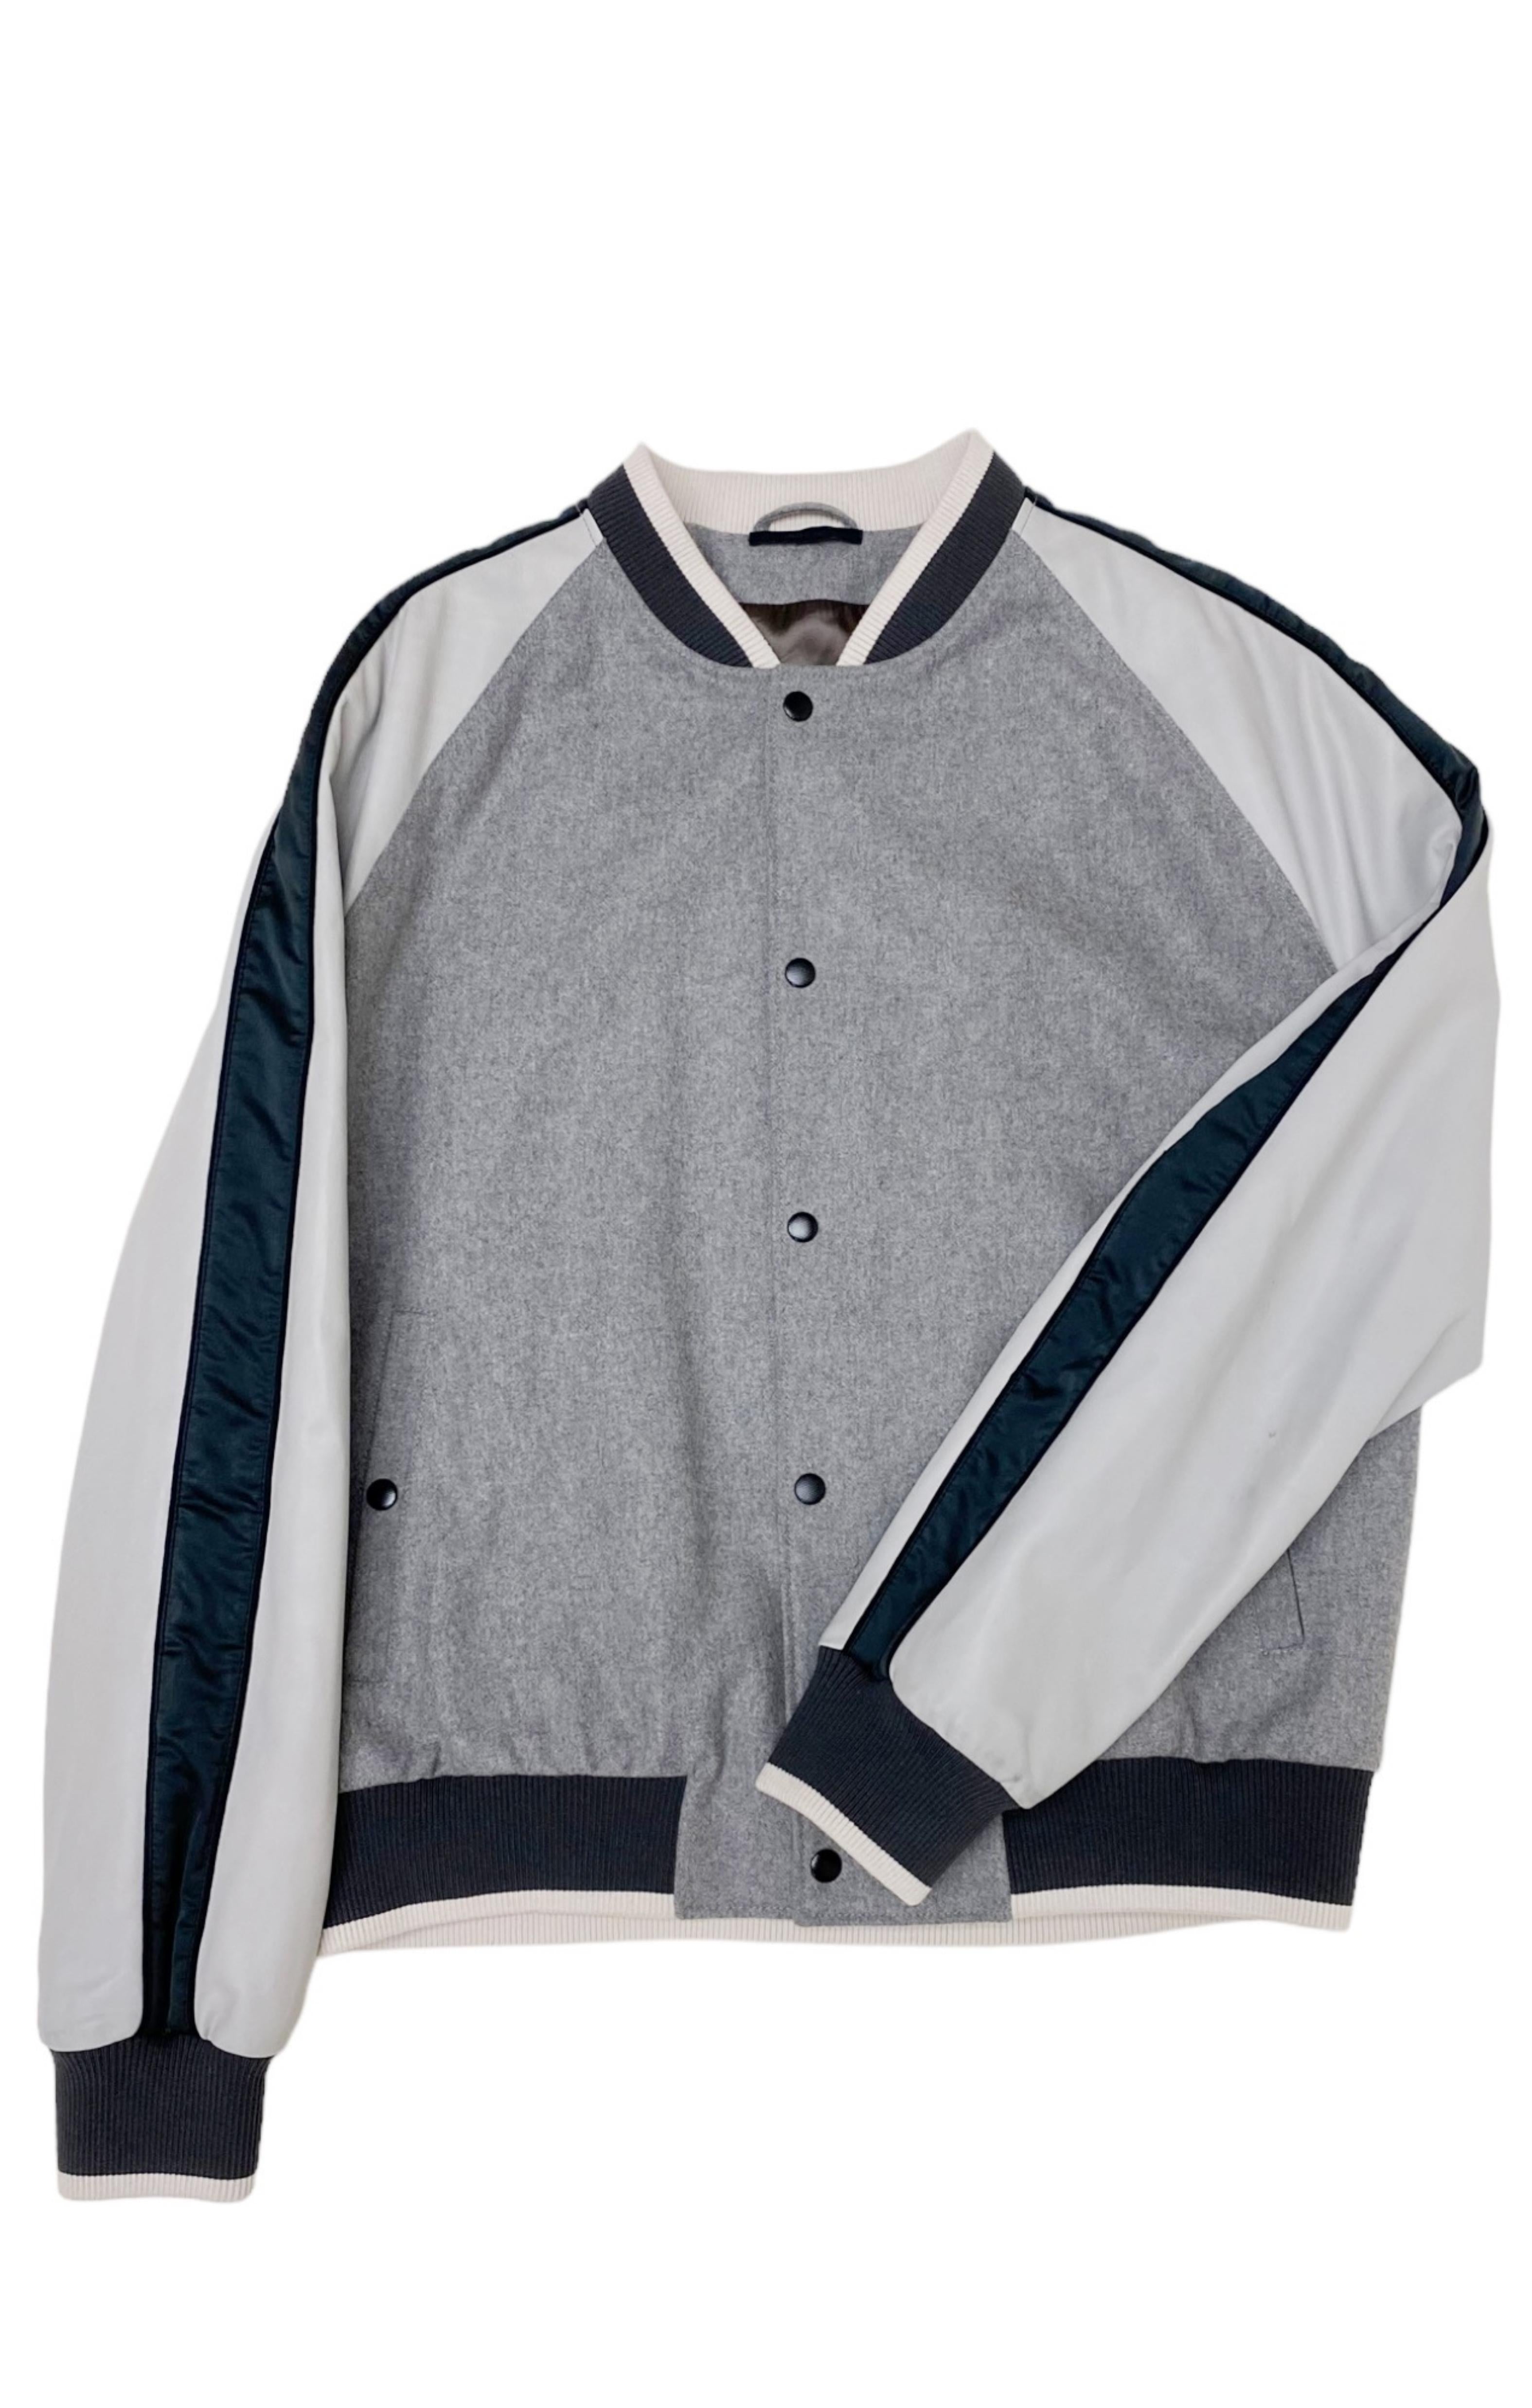 LANVIN (RARE) Jacket Size: No size tags, fits like XL